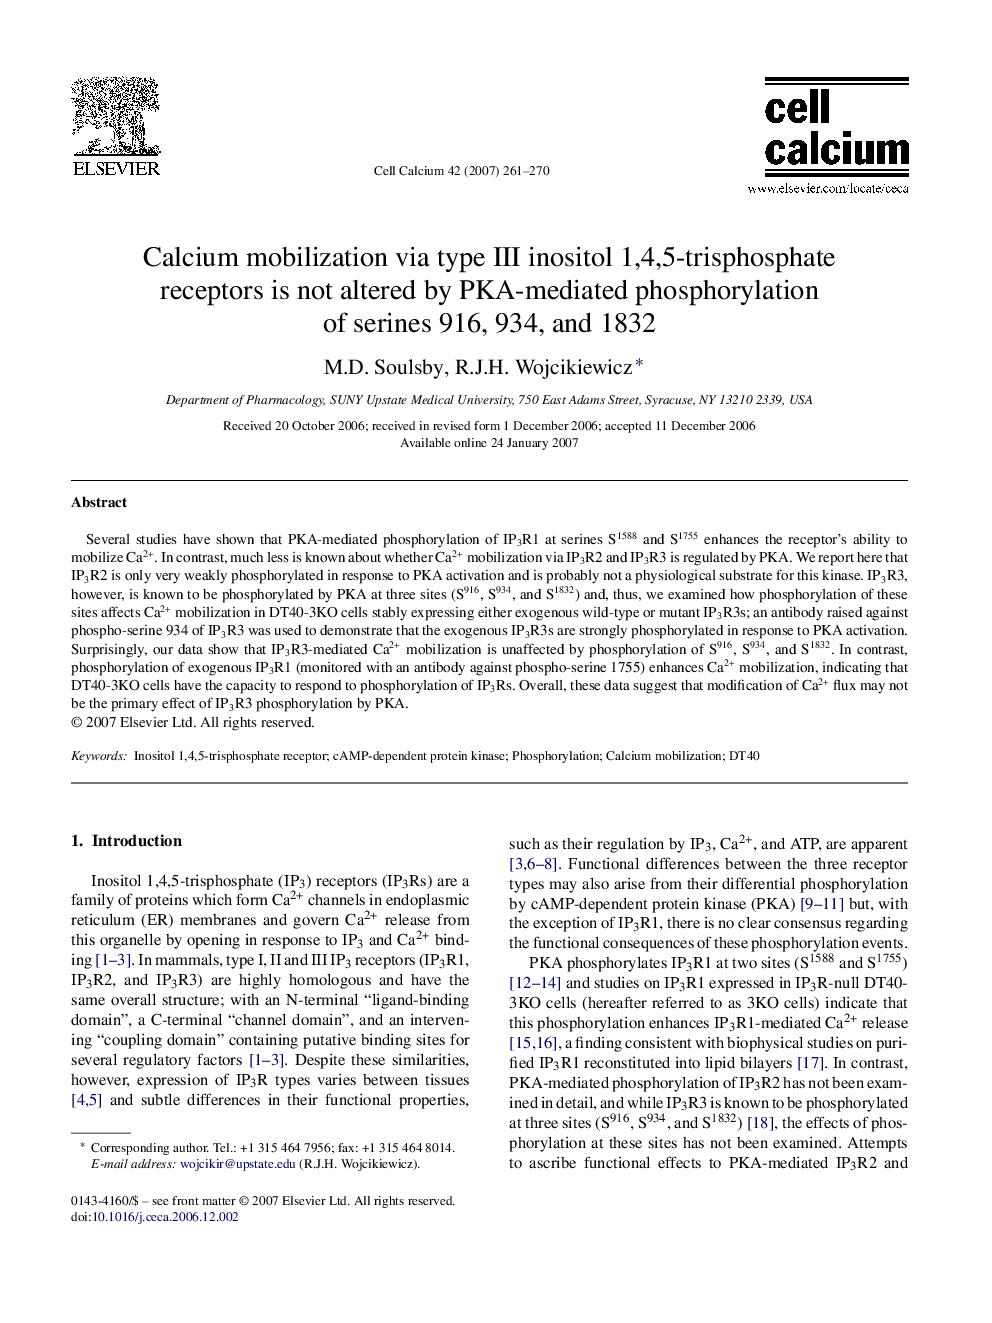 Calcium mobilization via type III inositol 1,4,5-trisphosphate receptors is not altered by PKA-mediated phosphorylation of serines 916, 934, and 1832